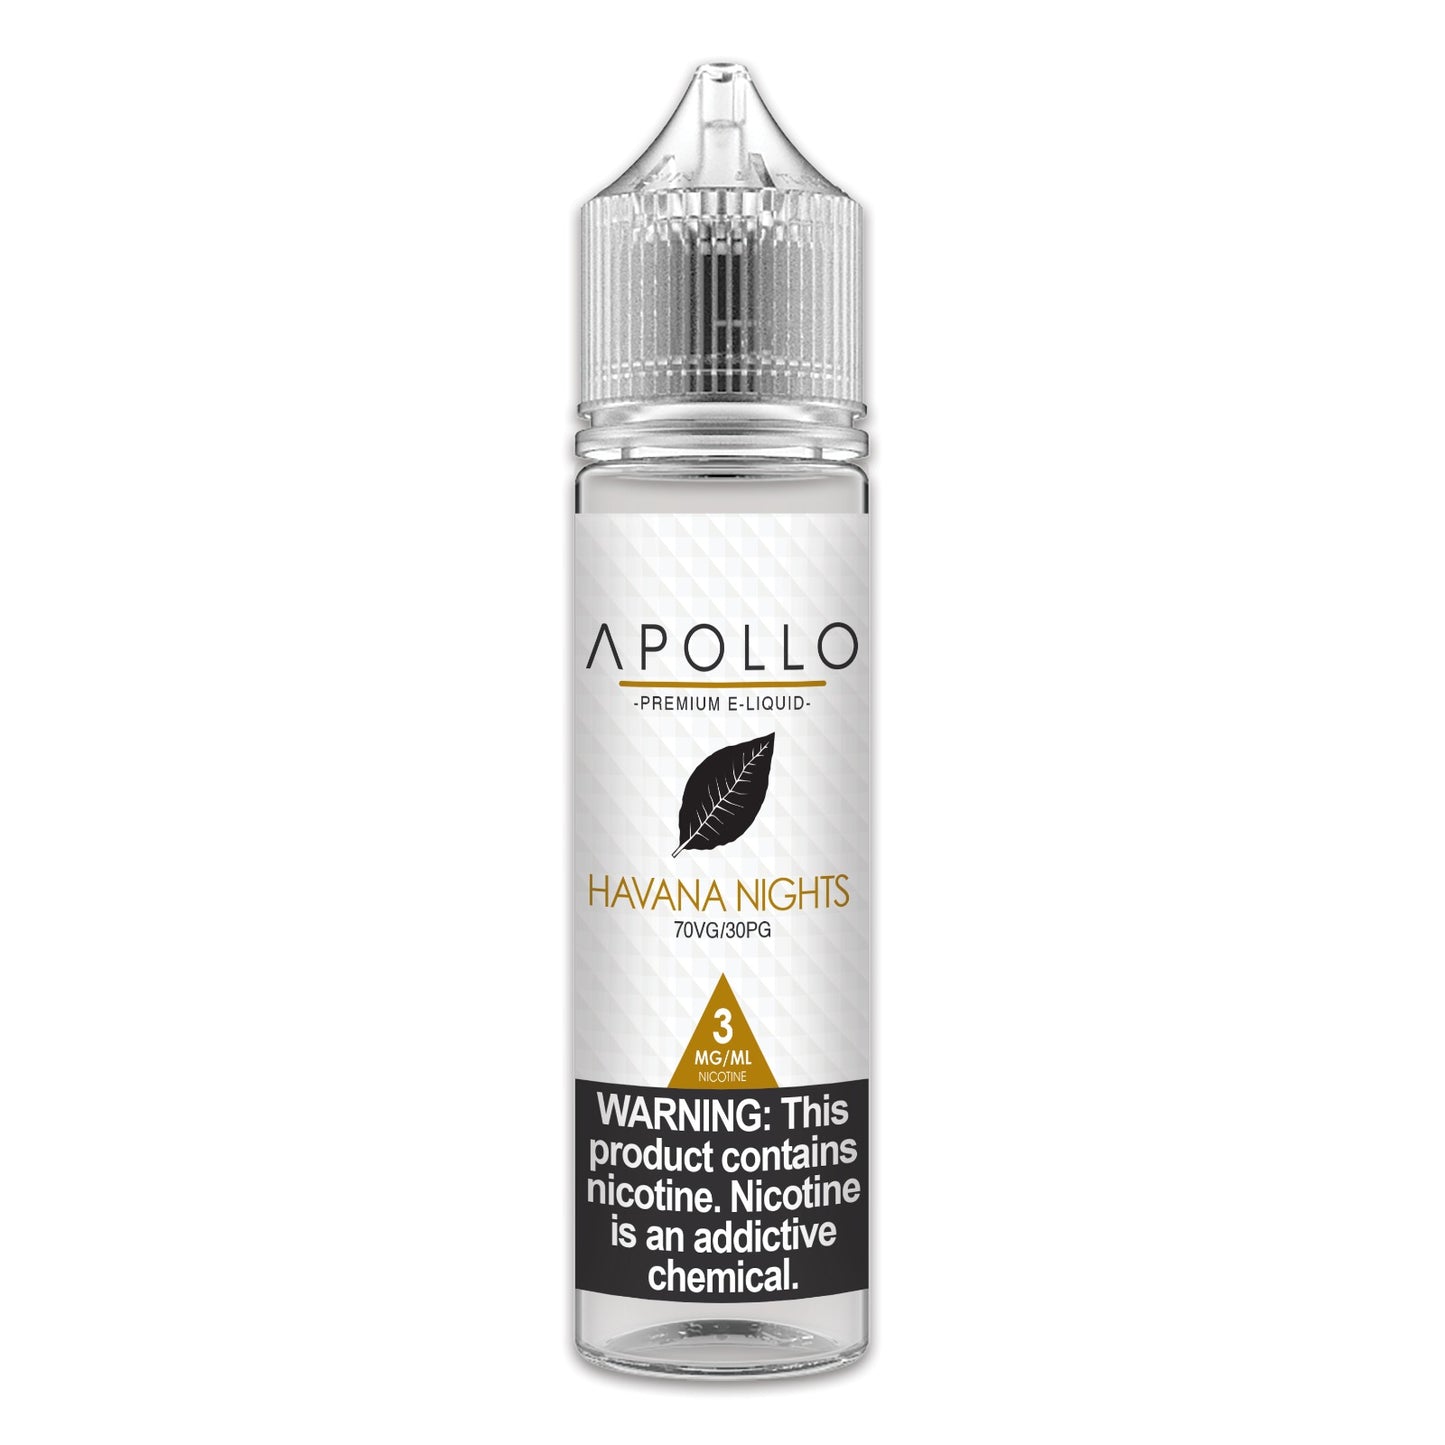 Apollo Havana Nights Max VG 60mL E-Liquid